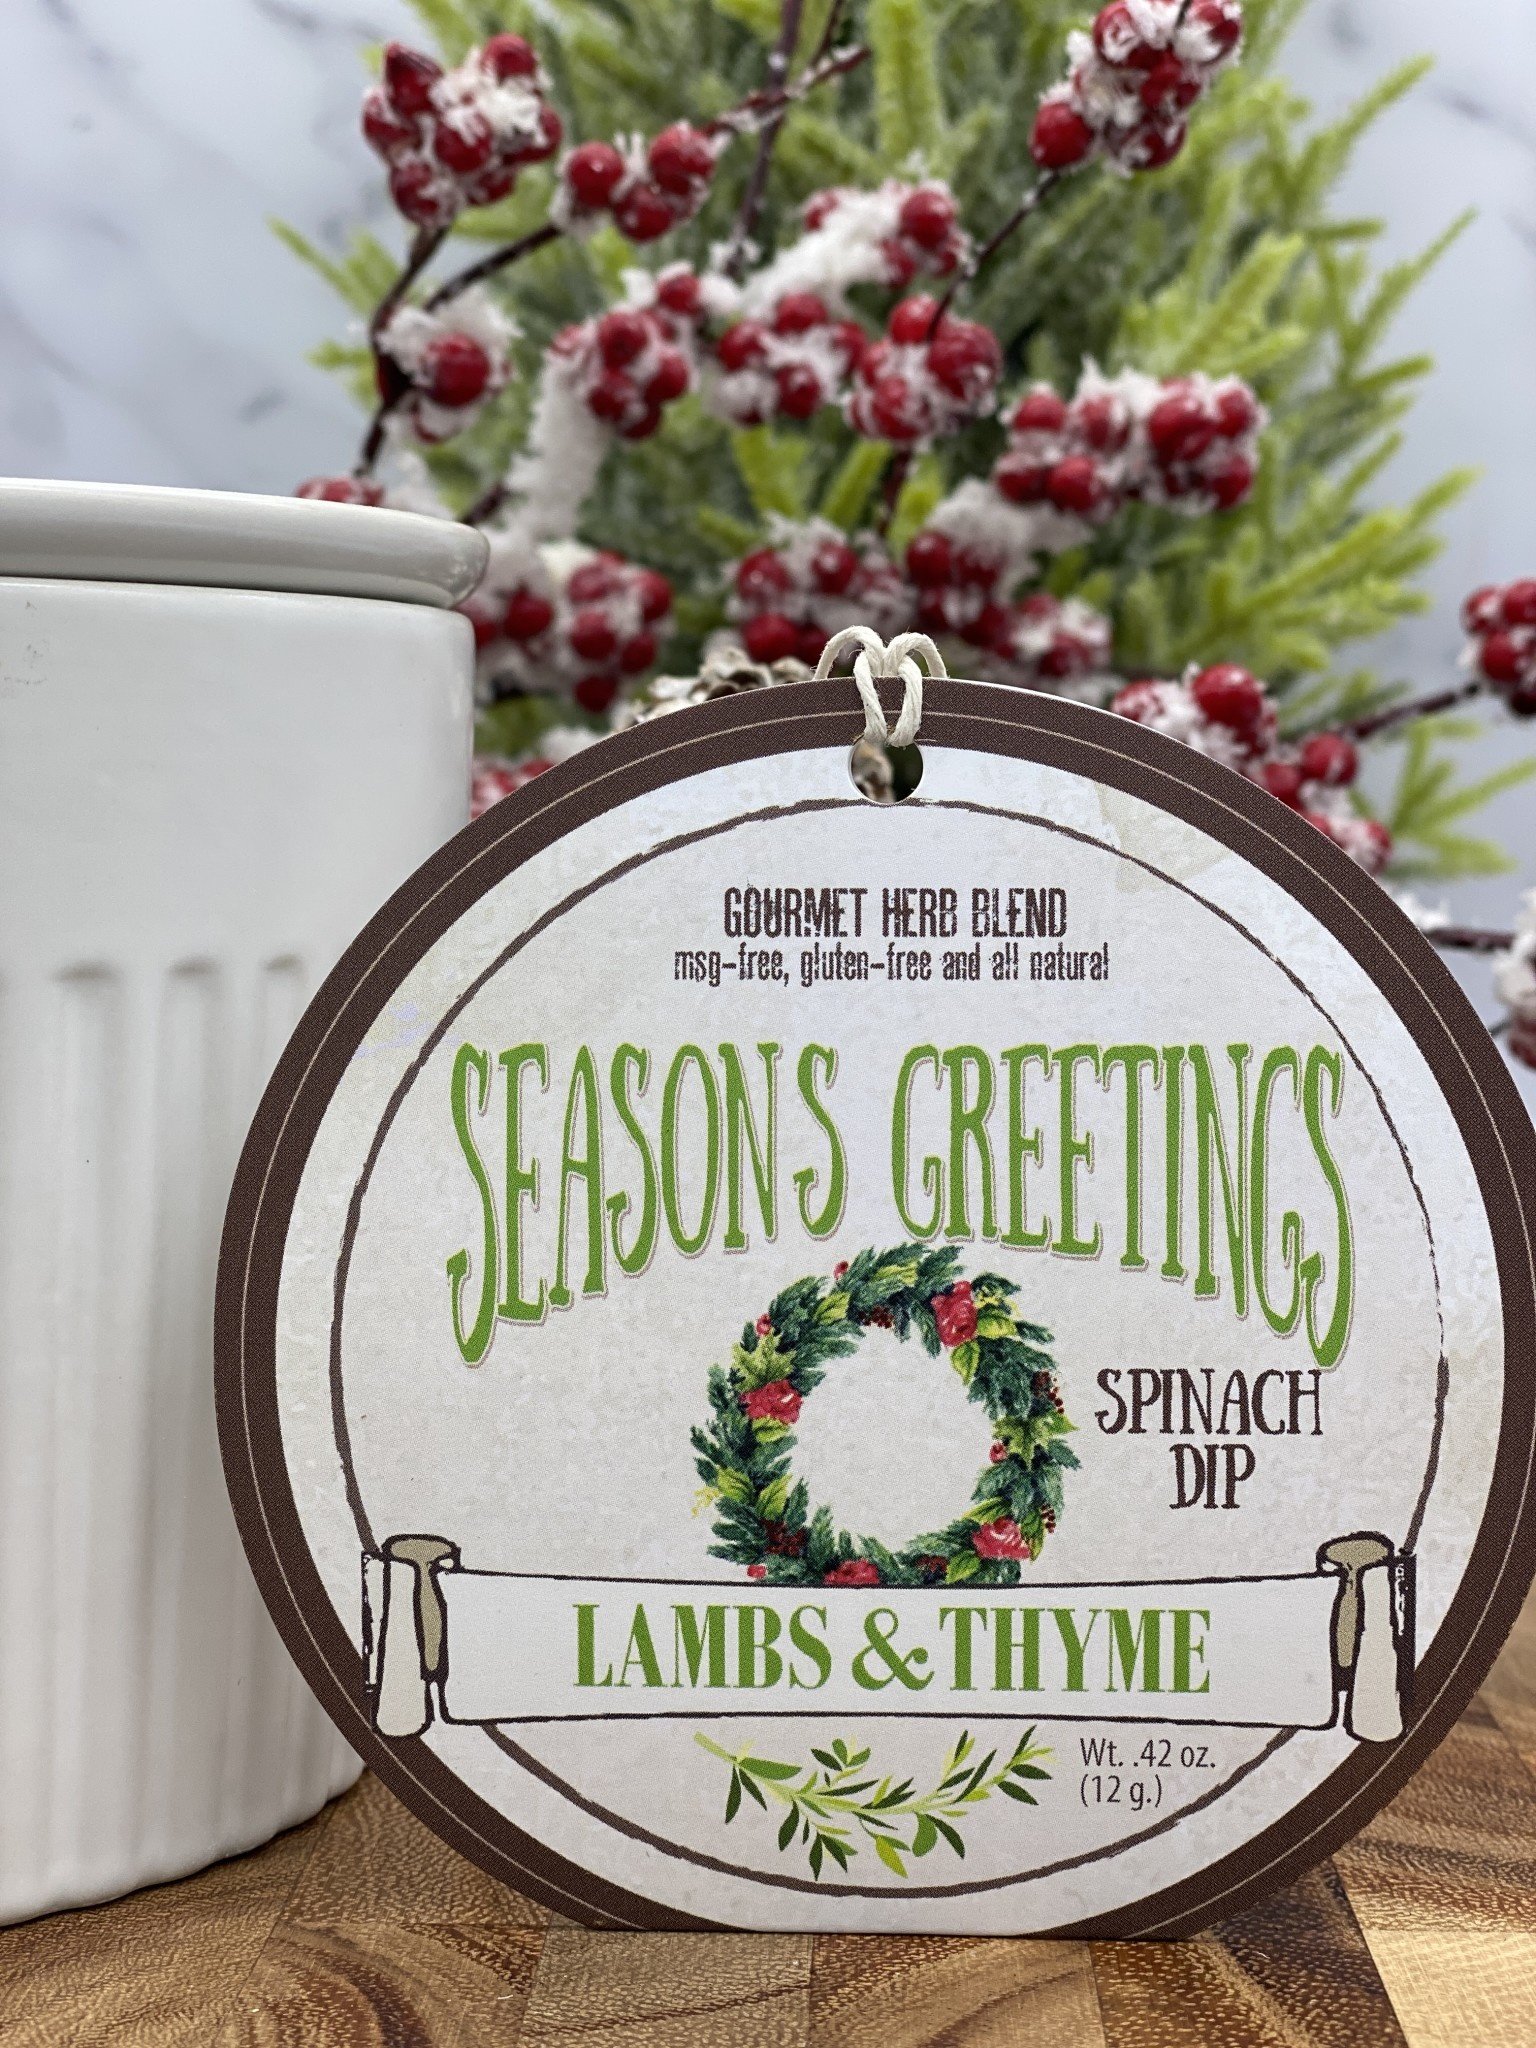 Lambs & Thyme Holiday Dips Seasons Greetings